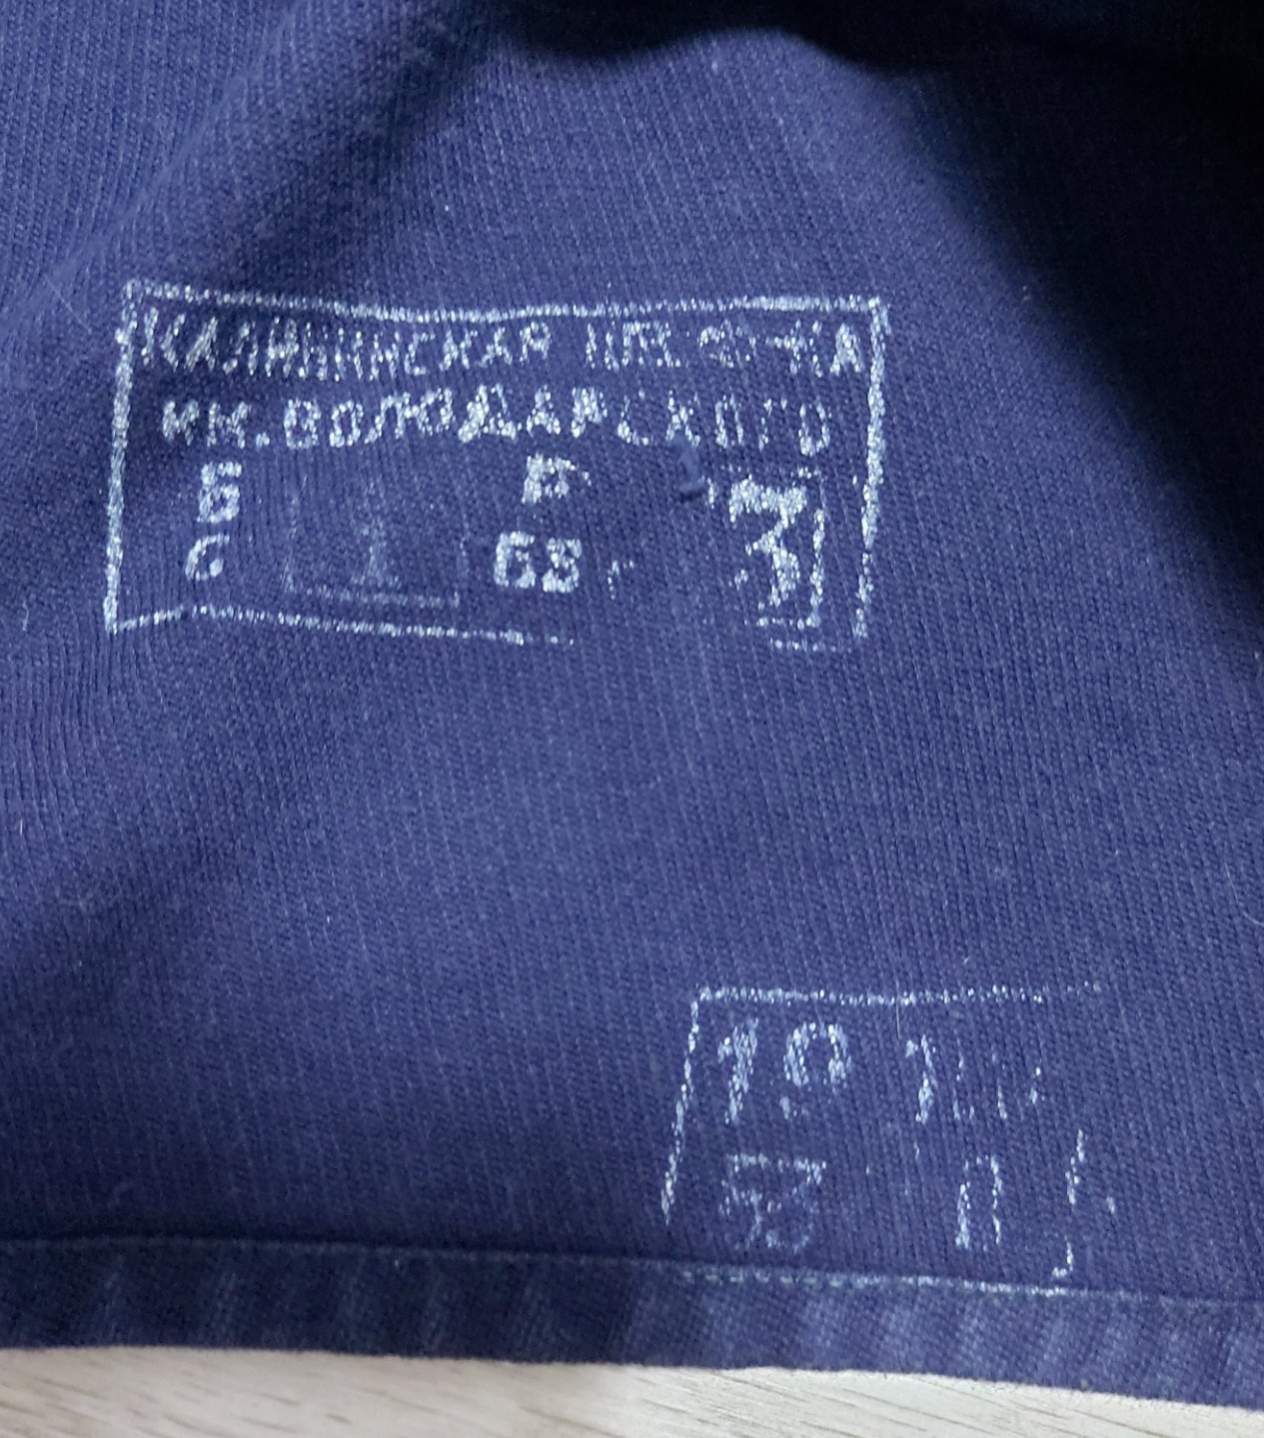 Need help! identifying uniform stamp